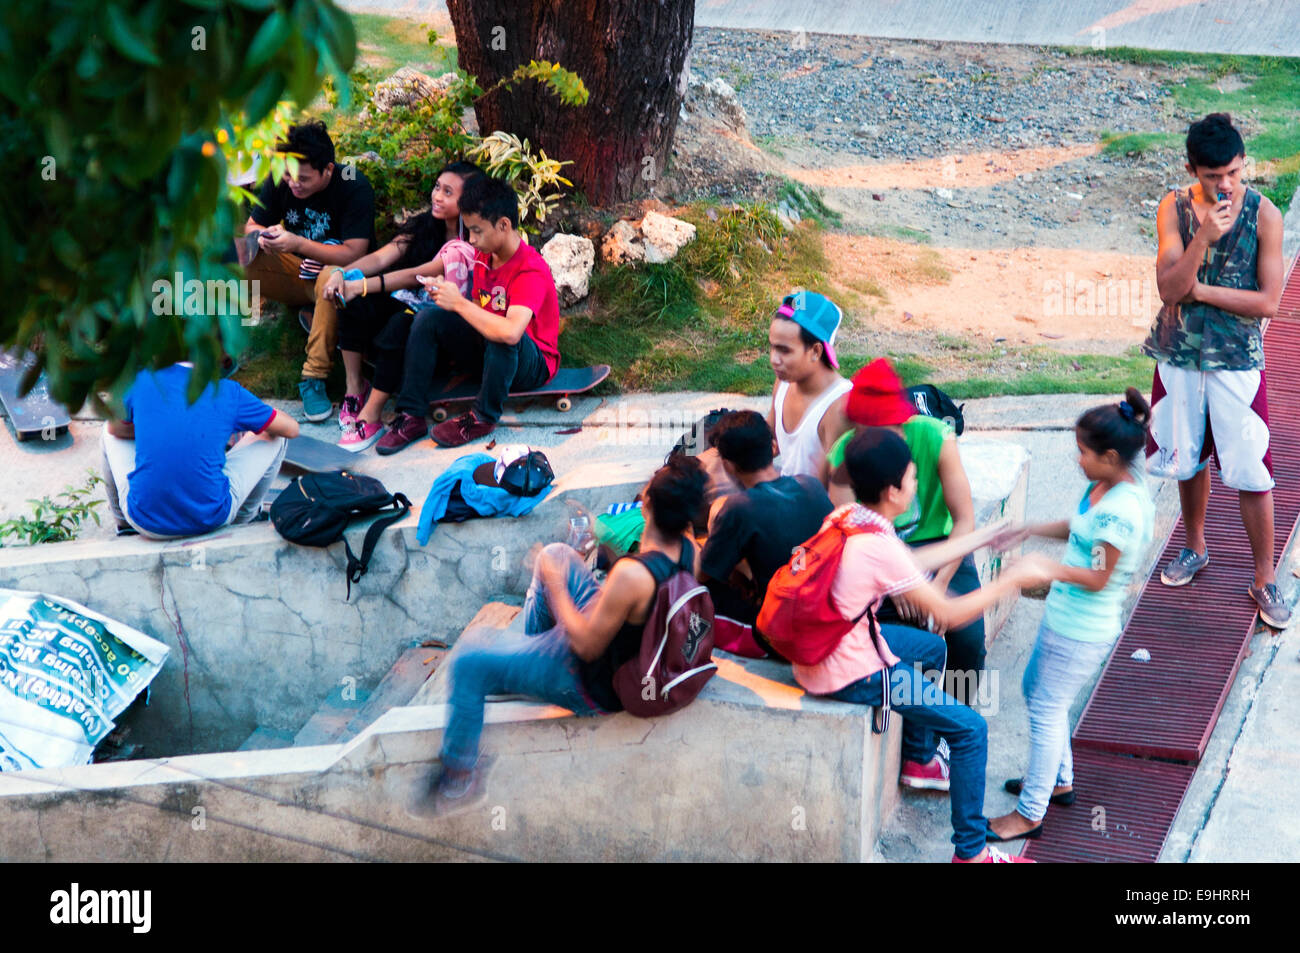 Teenagers in Plaza Divisoria, CBD, Cagayan de oro, Misamis Oriental, Mindanao, Philippines Stock Photo